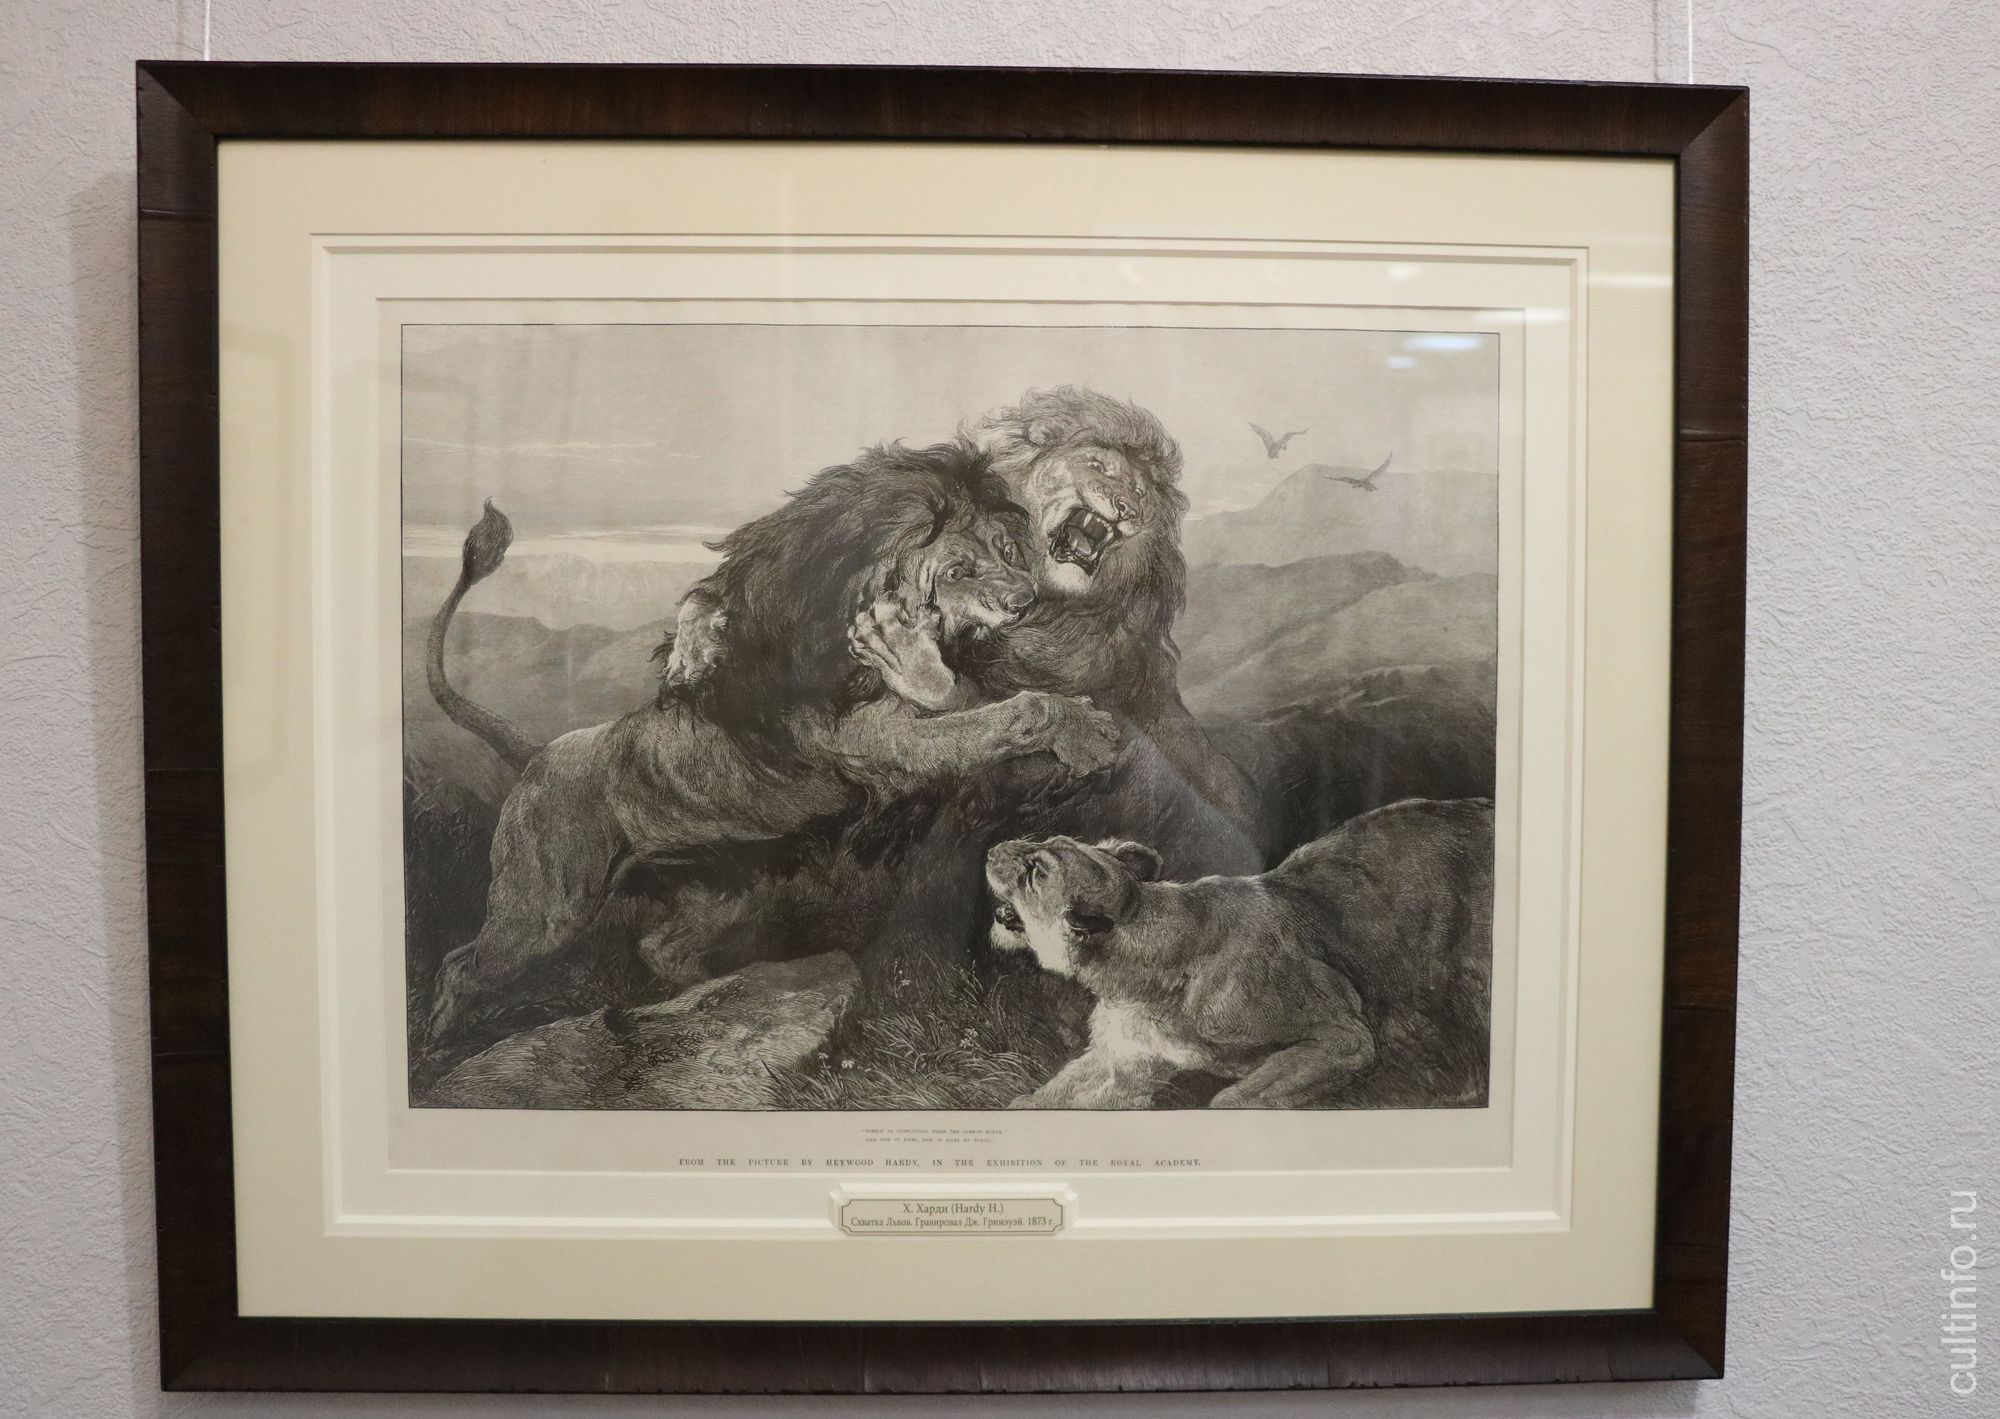 Х.Харди. Гравер – Дж.Гринэуэй. Схватка львов. 1873 г.